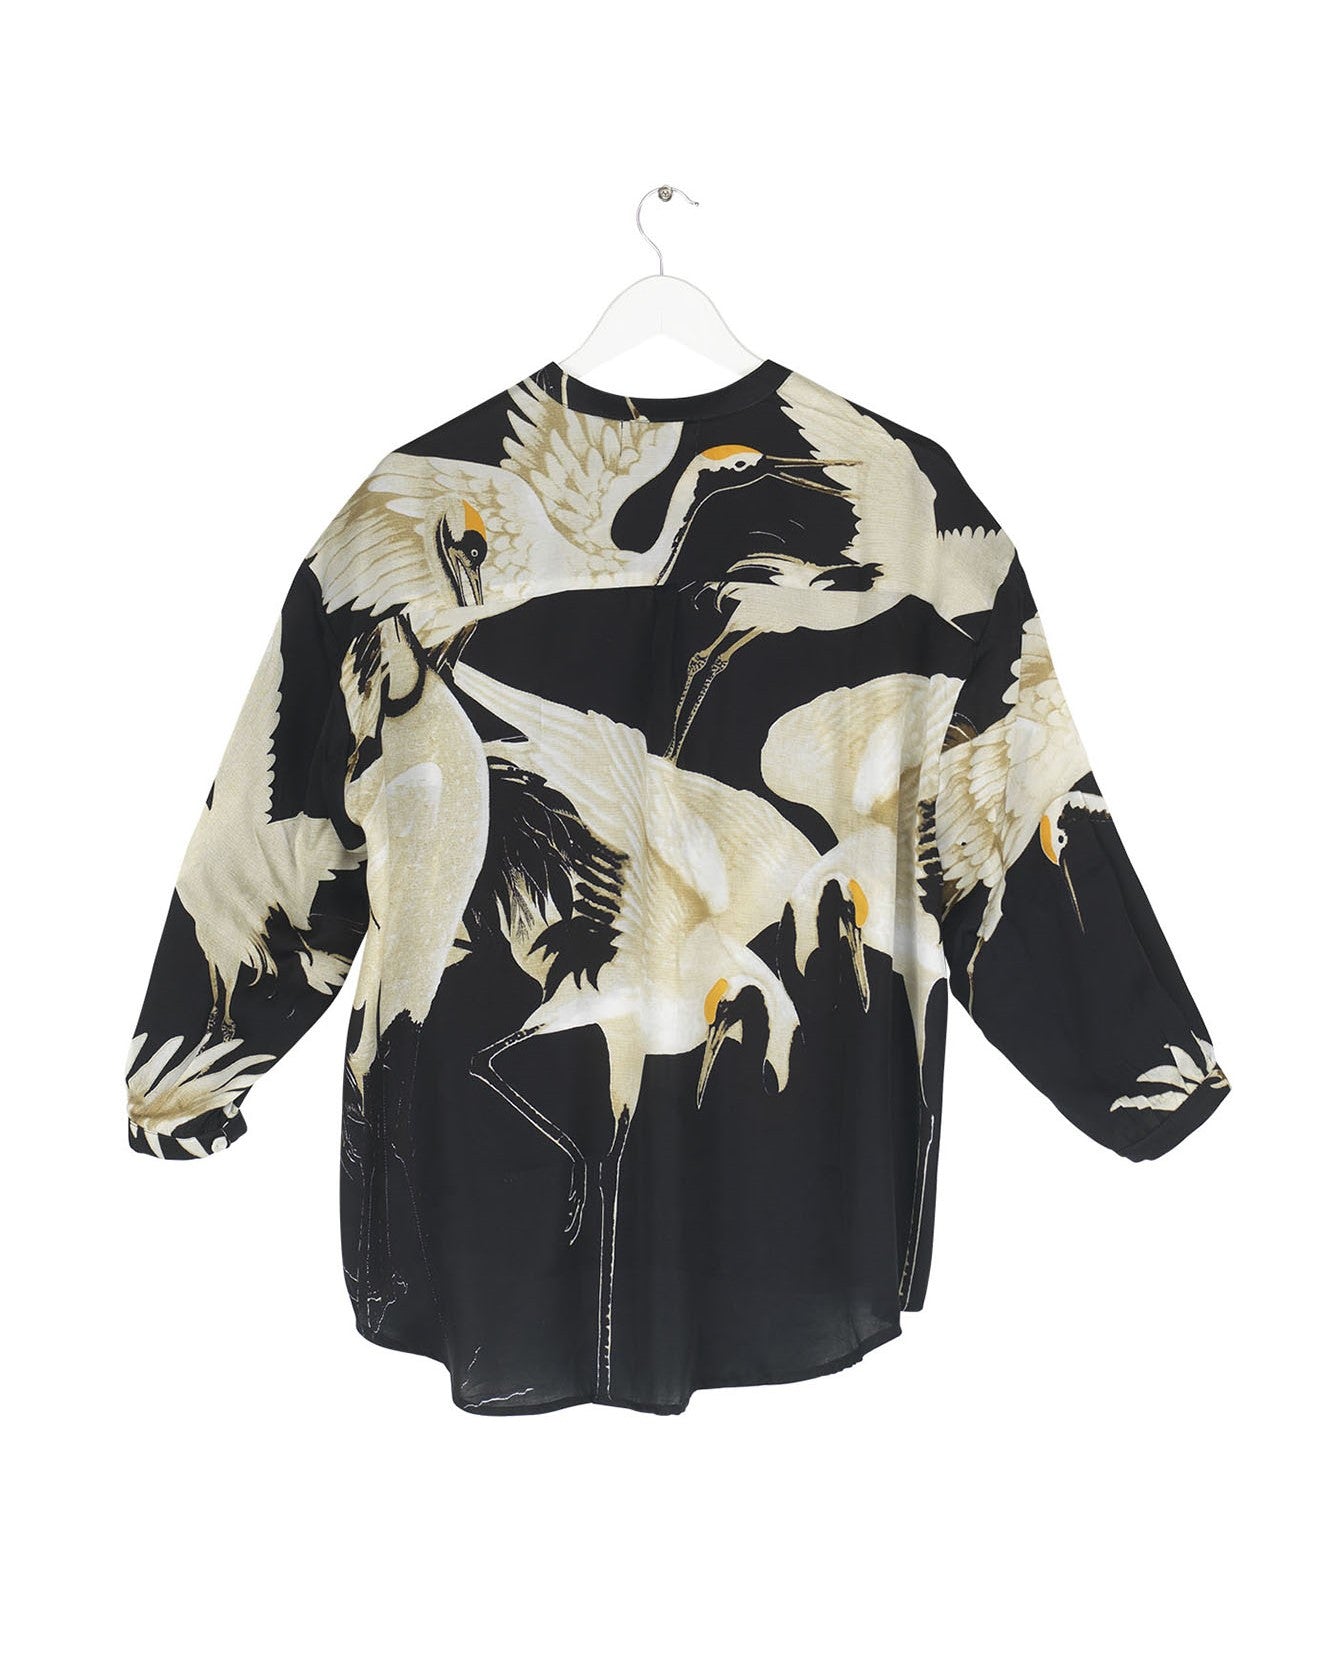 Stork Black Darcy Shirt - S/M